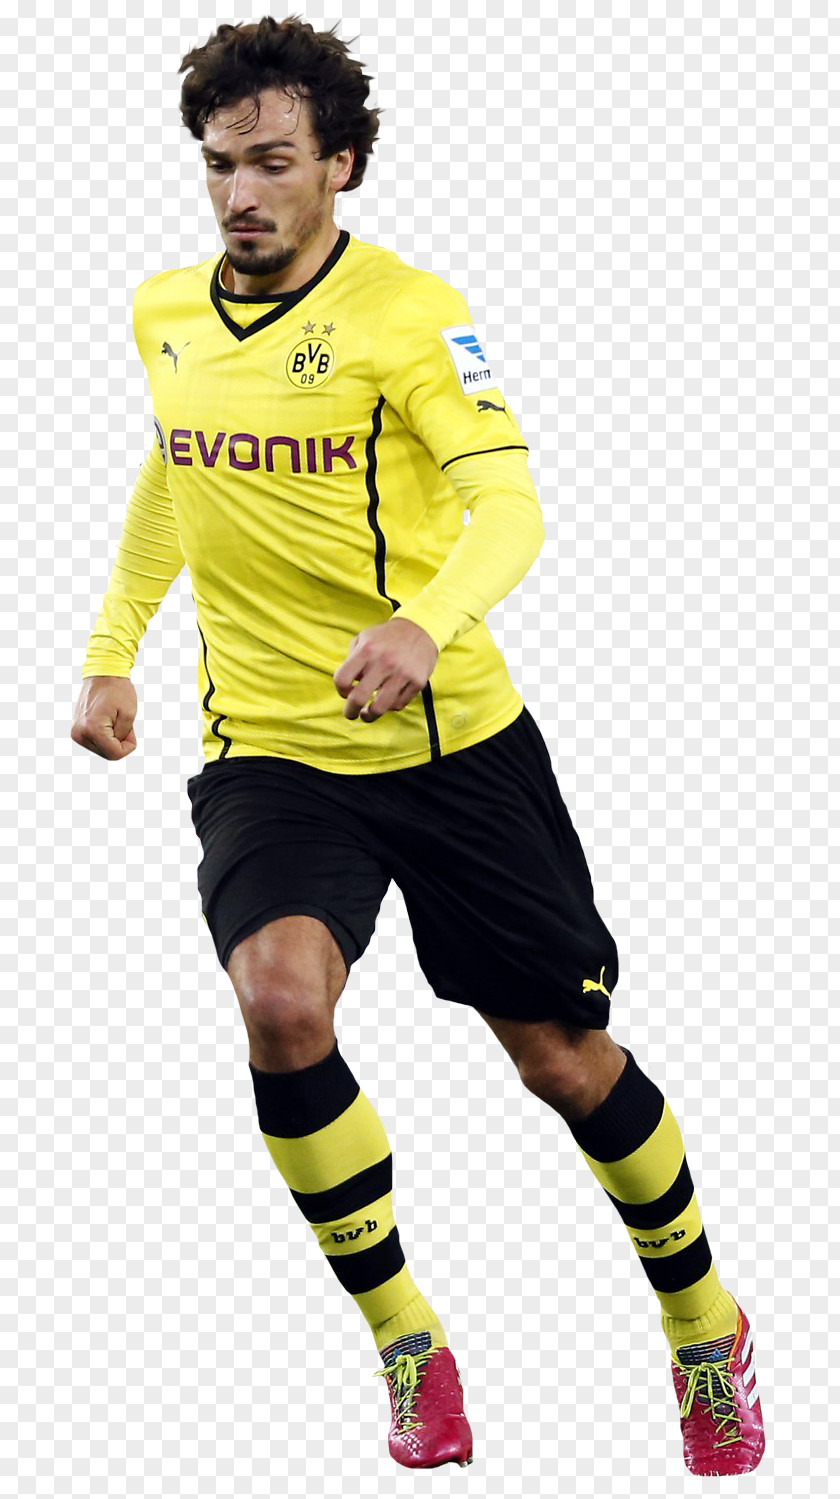 Football Mats Hummels Borussia Dortmund Germany National Team Bundesliga 2014 FIFA World Cup PNG